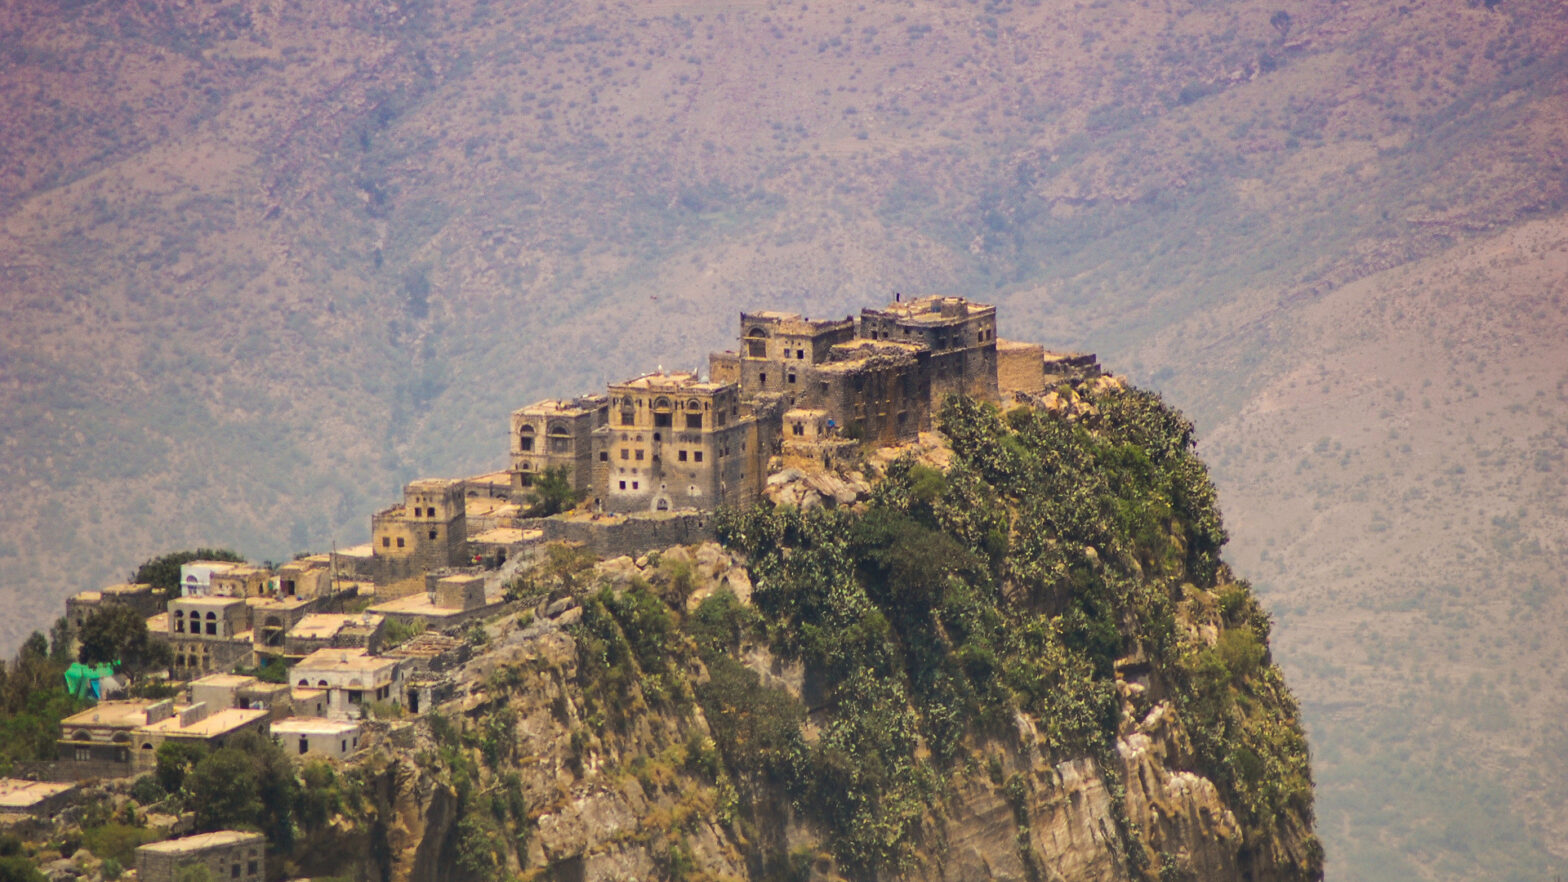 Yemen landmarks and attractions